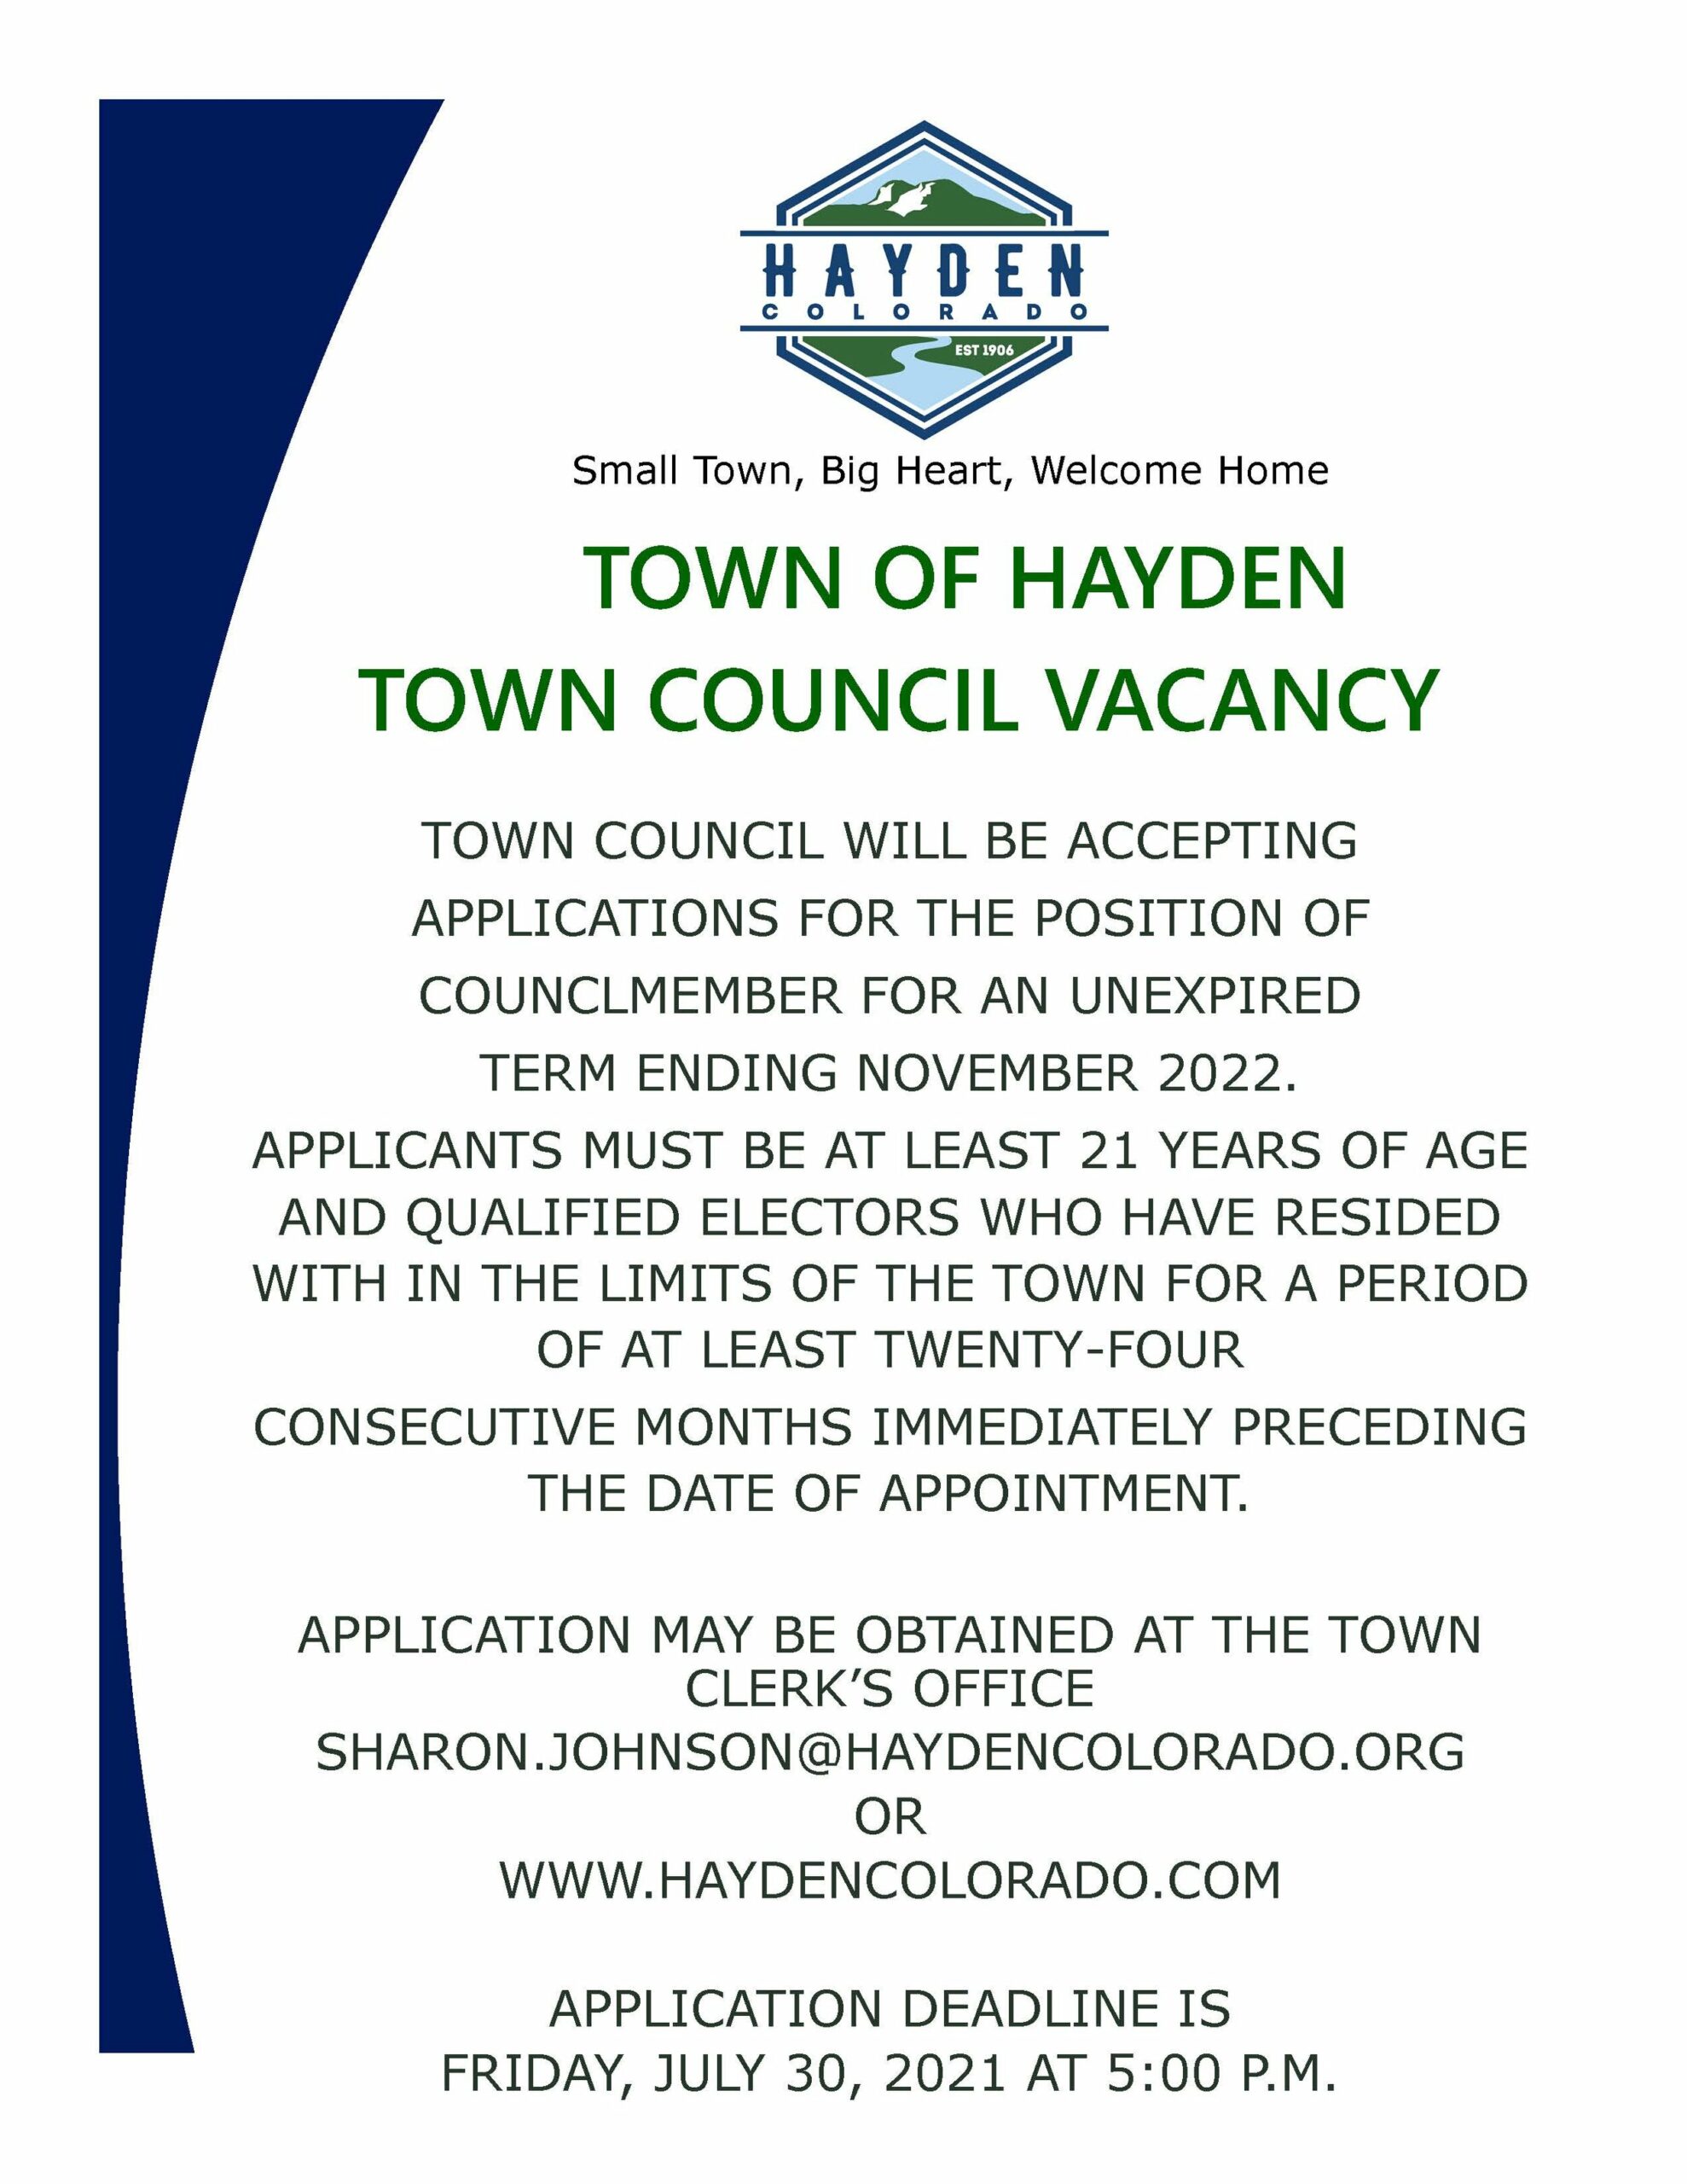 Town council vacancy.